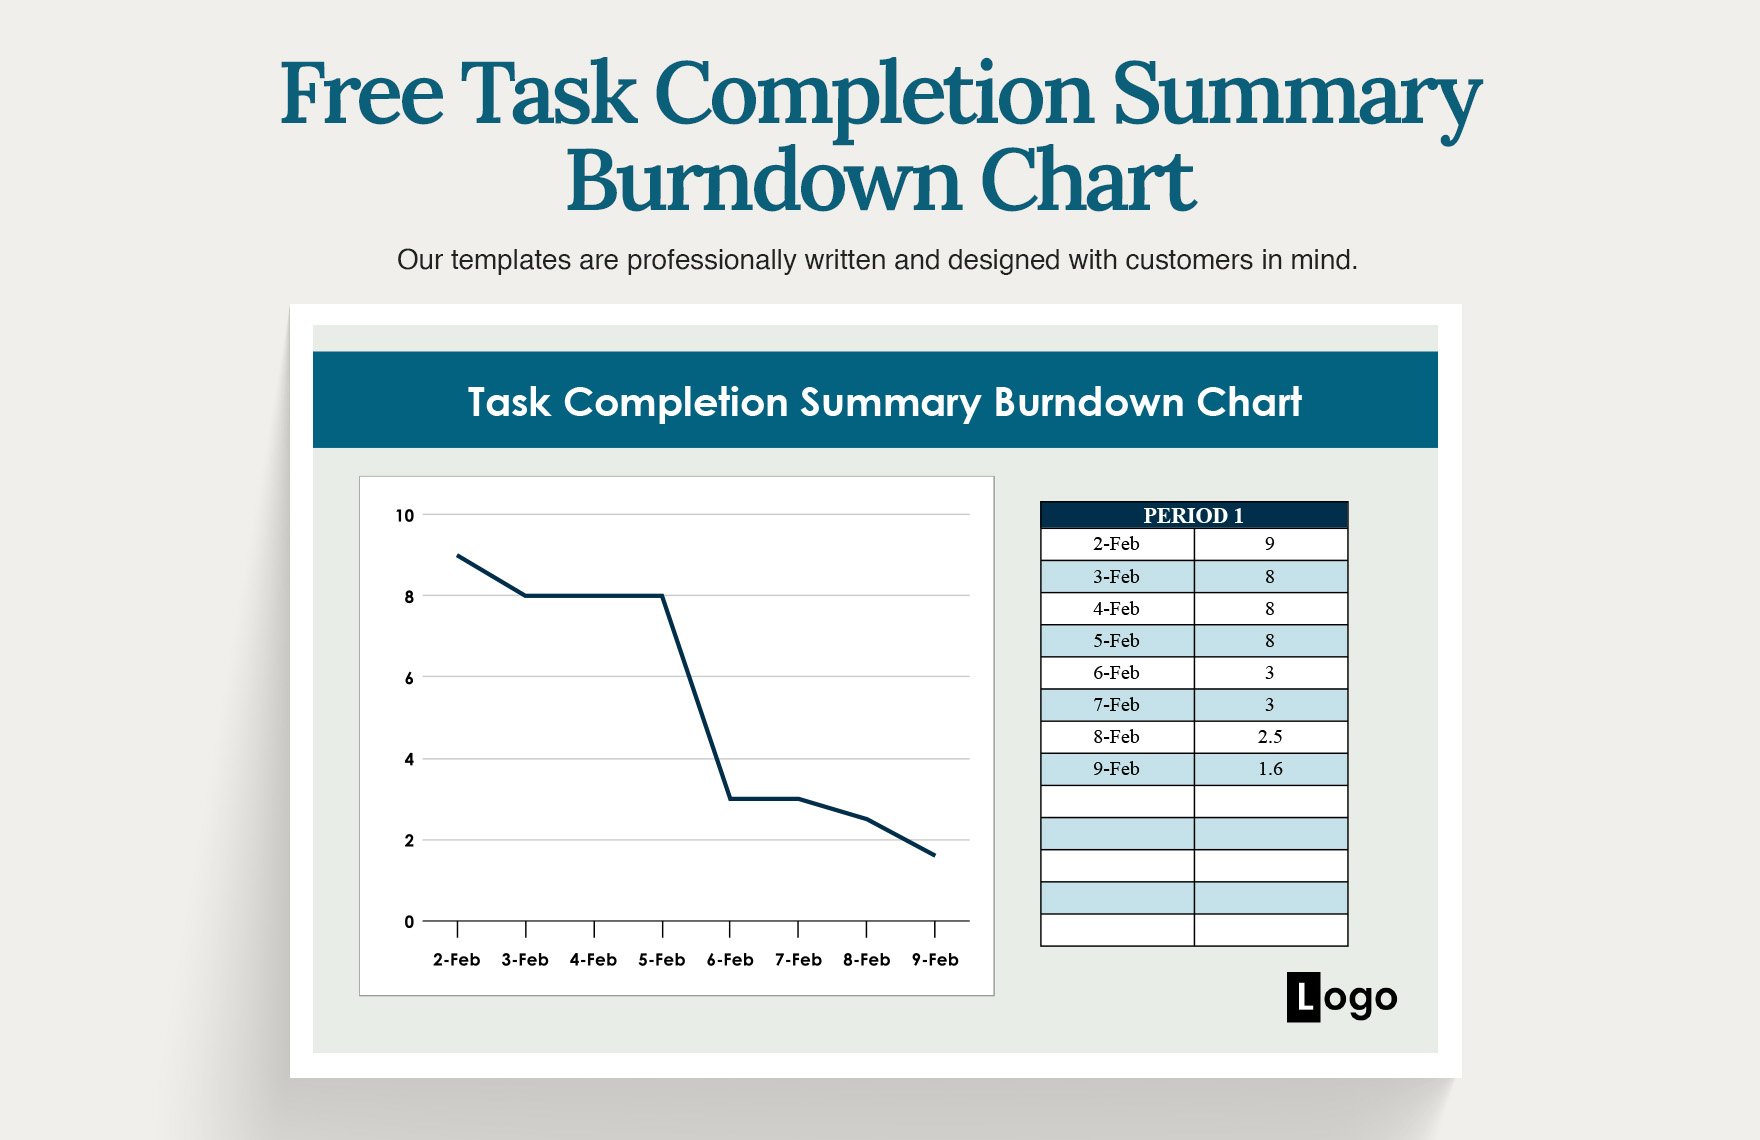 Task Completion Summary Burndown Chart